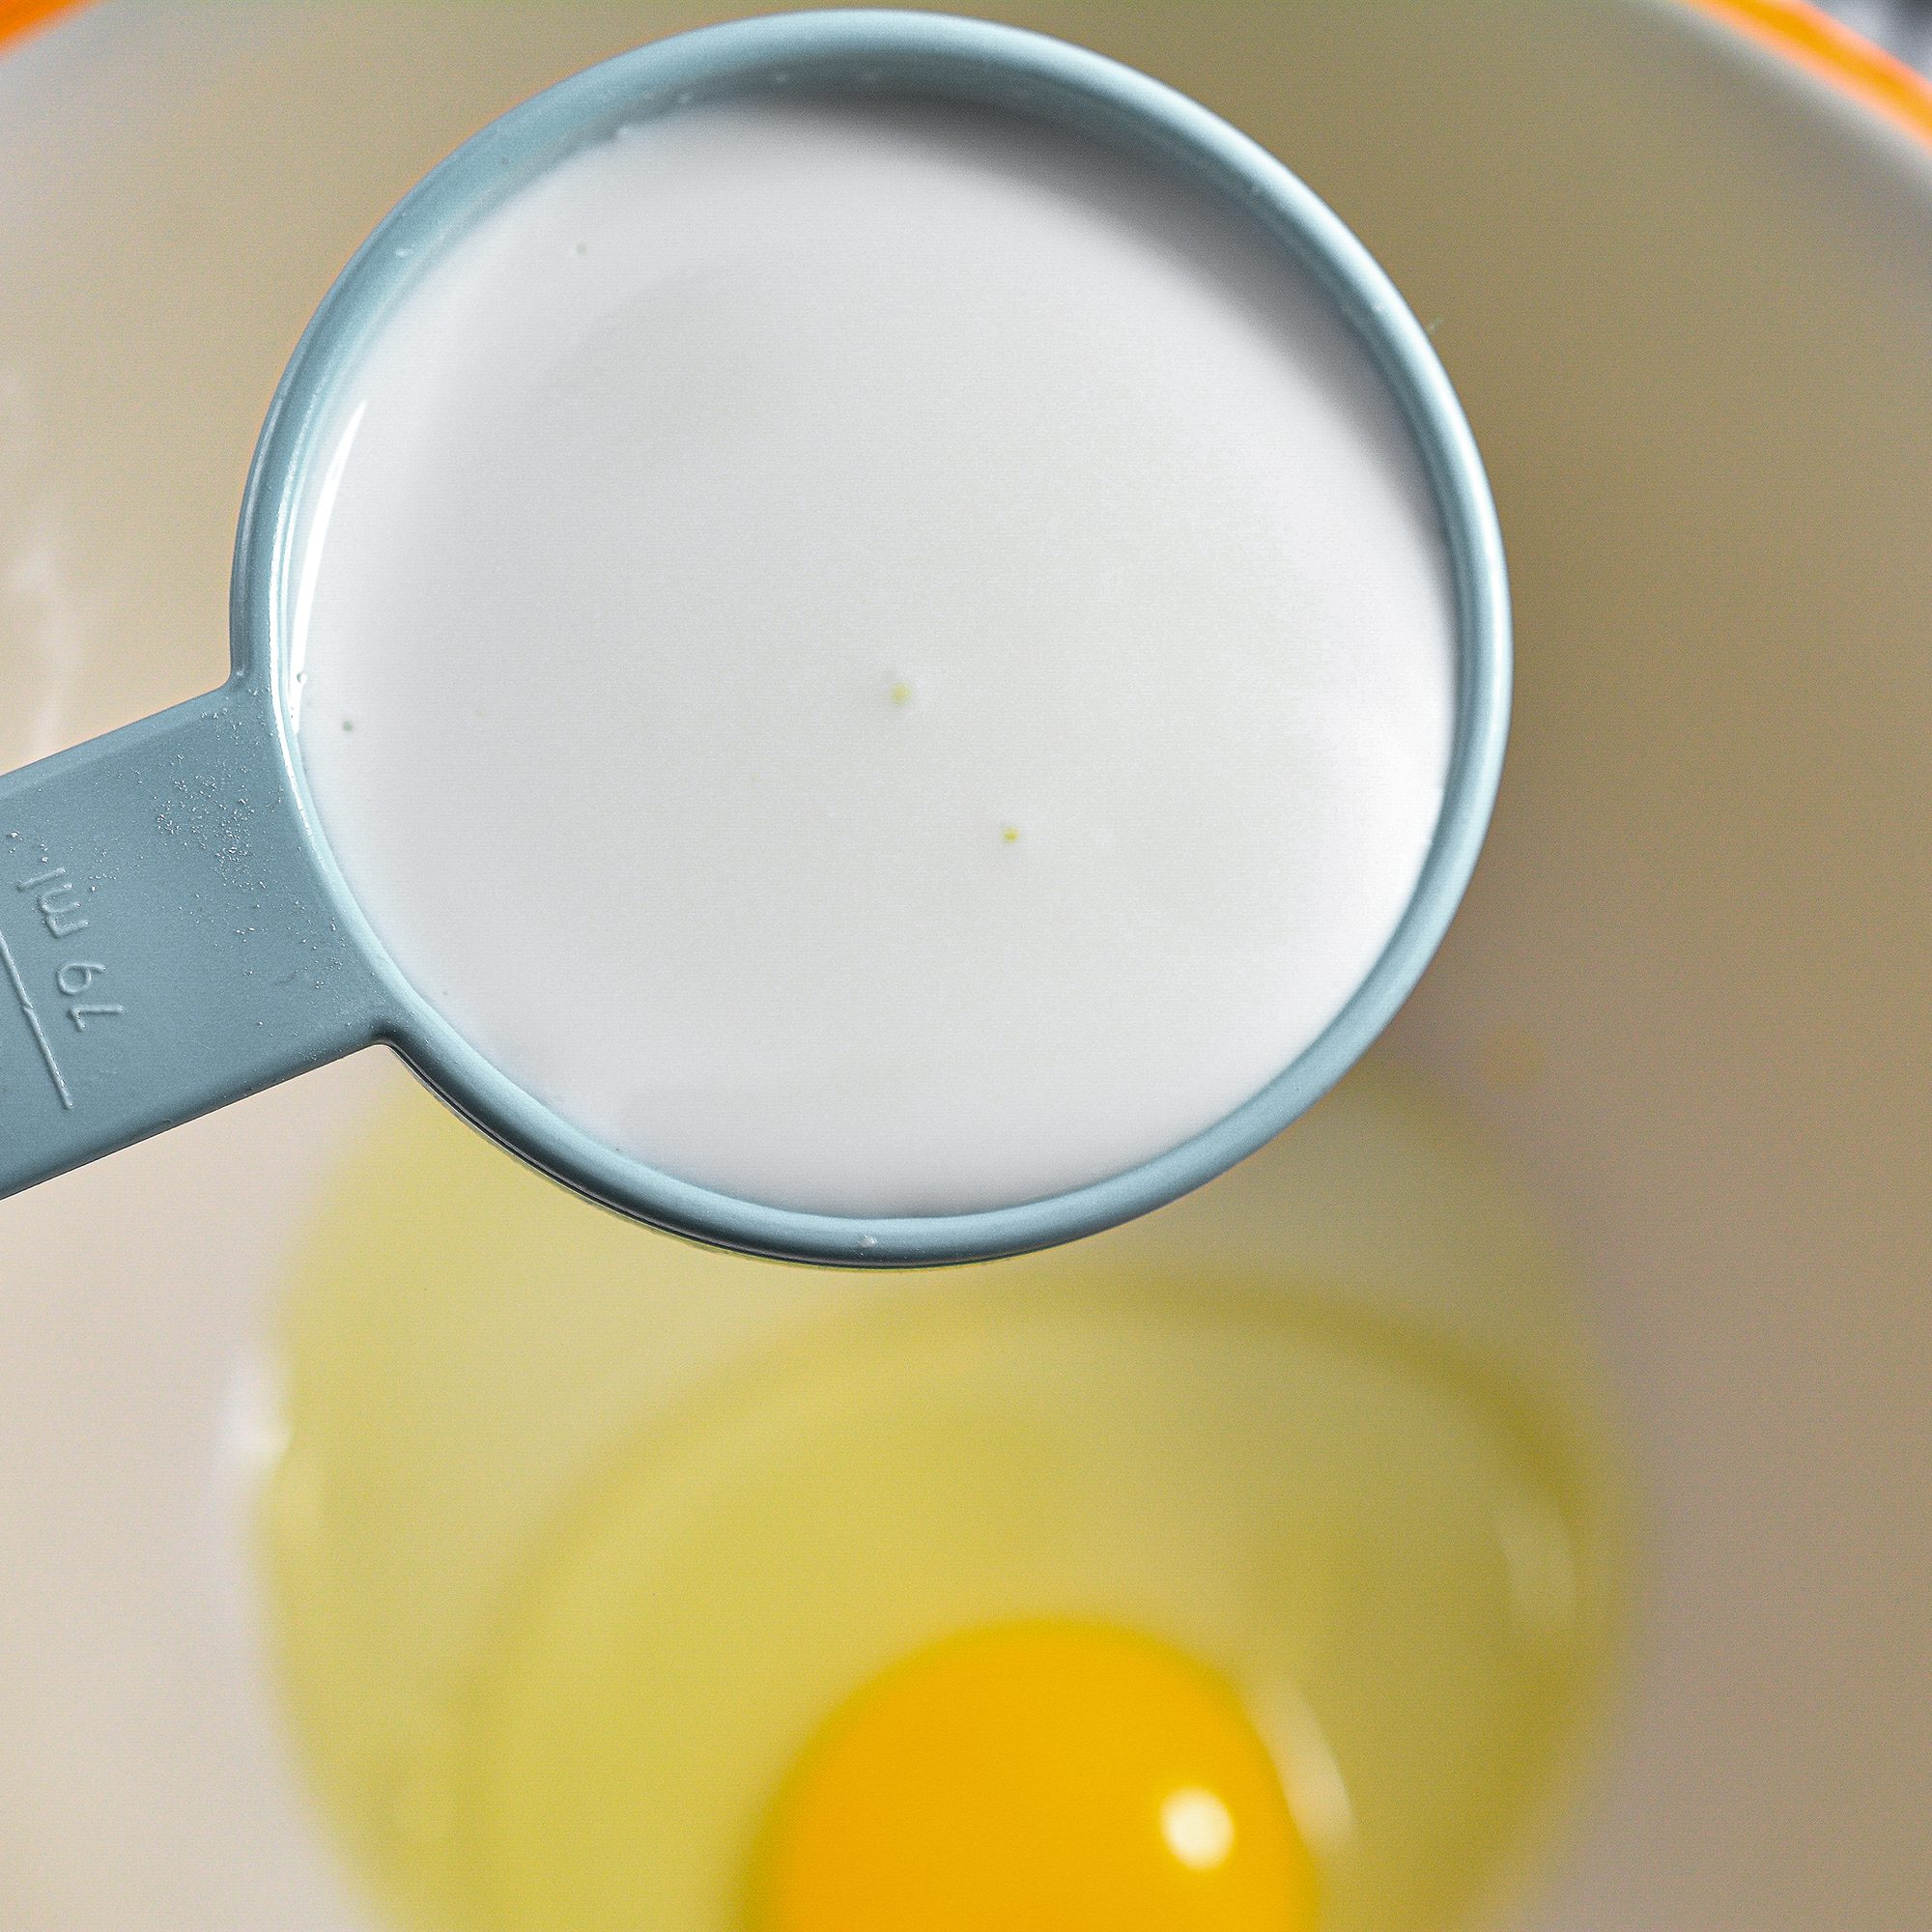 Adding eggs and buttermilk